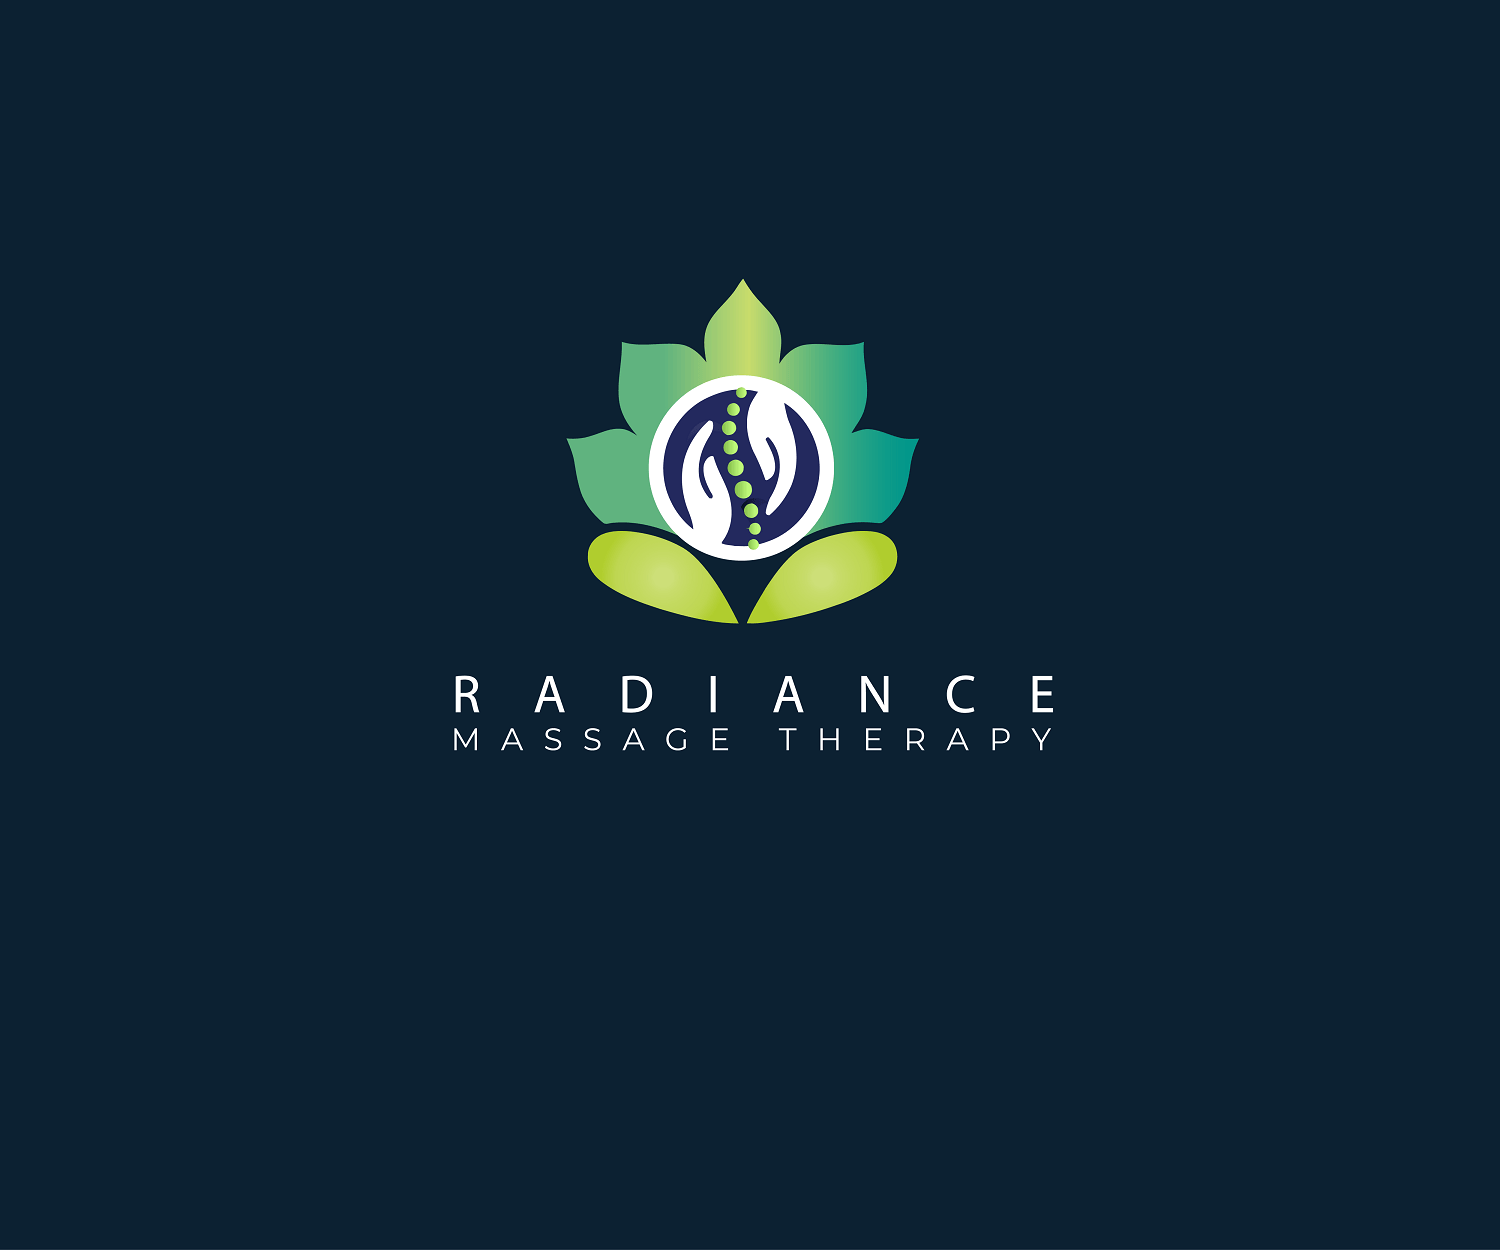 Massage Logo - Professional, Serious, Remedial Massage Logo Design for Radiance ...